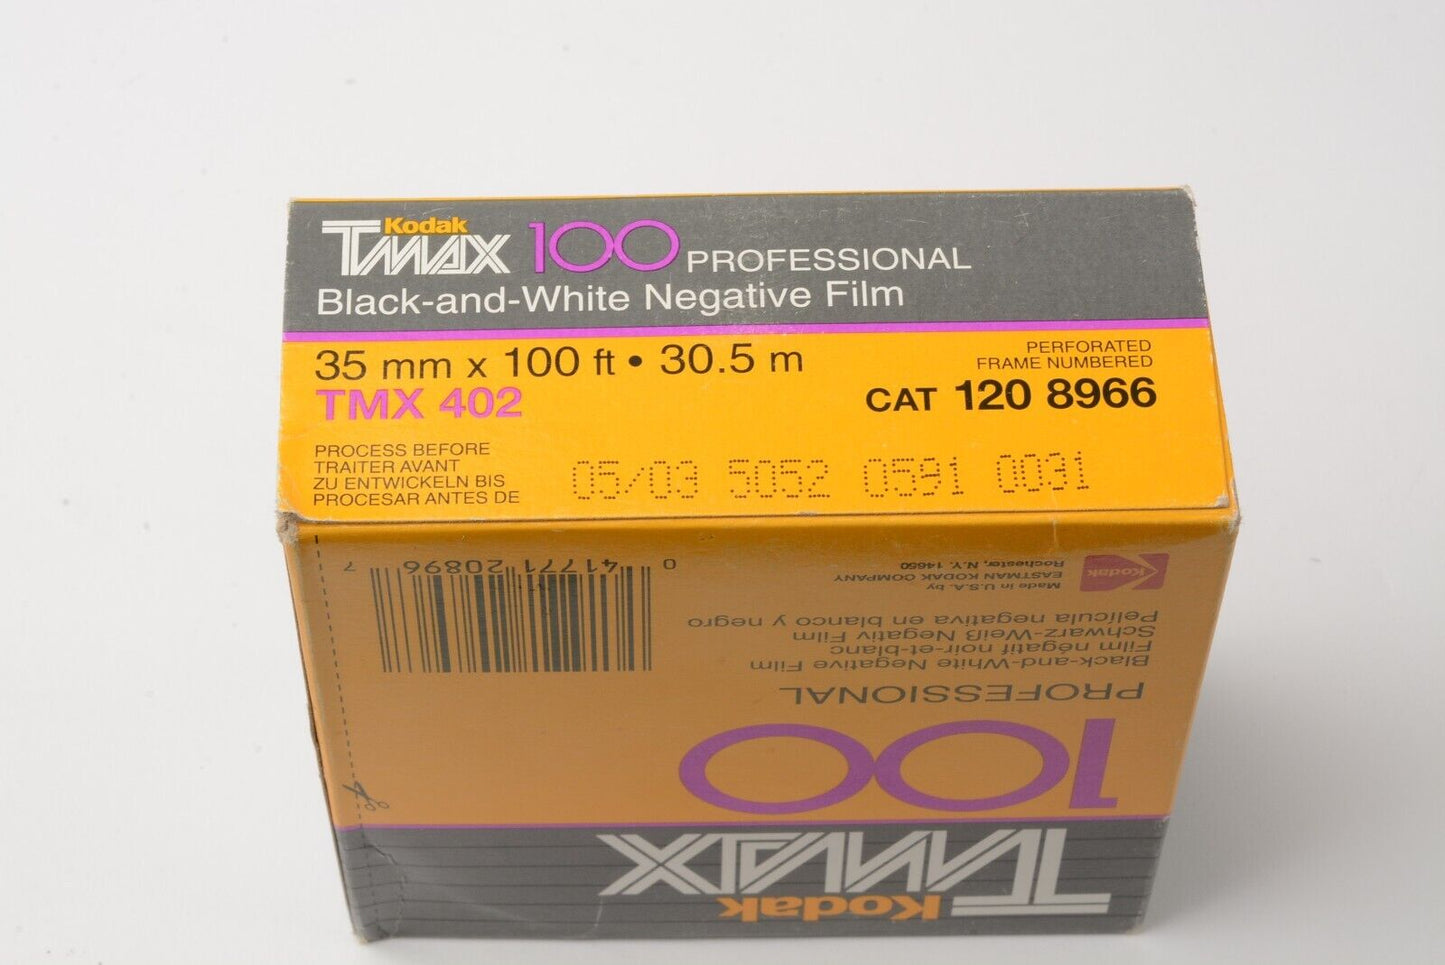 KODAK TMX 402 35mm 100 FEET 100 ASA B&W FILM EXPIRED 05/03 SEALED BOX